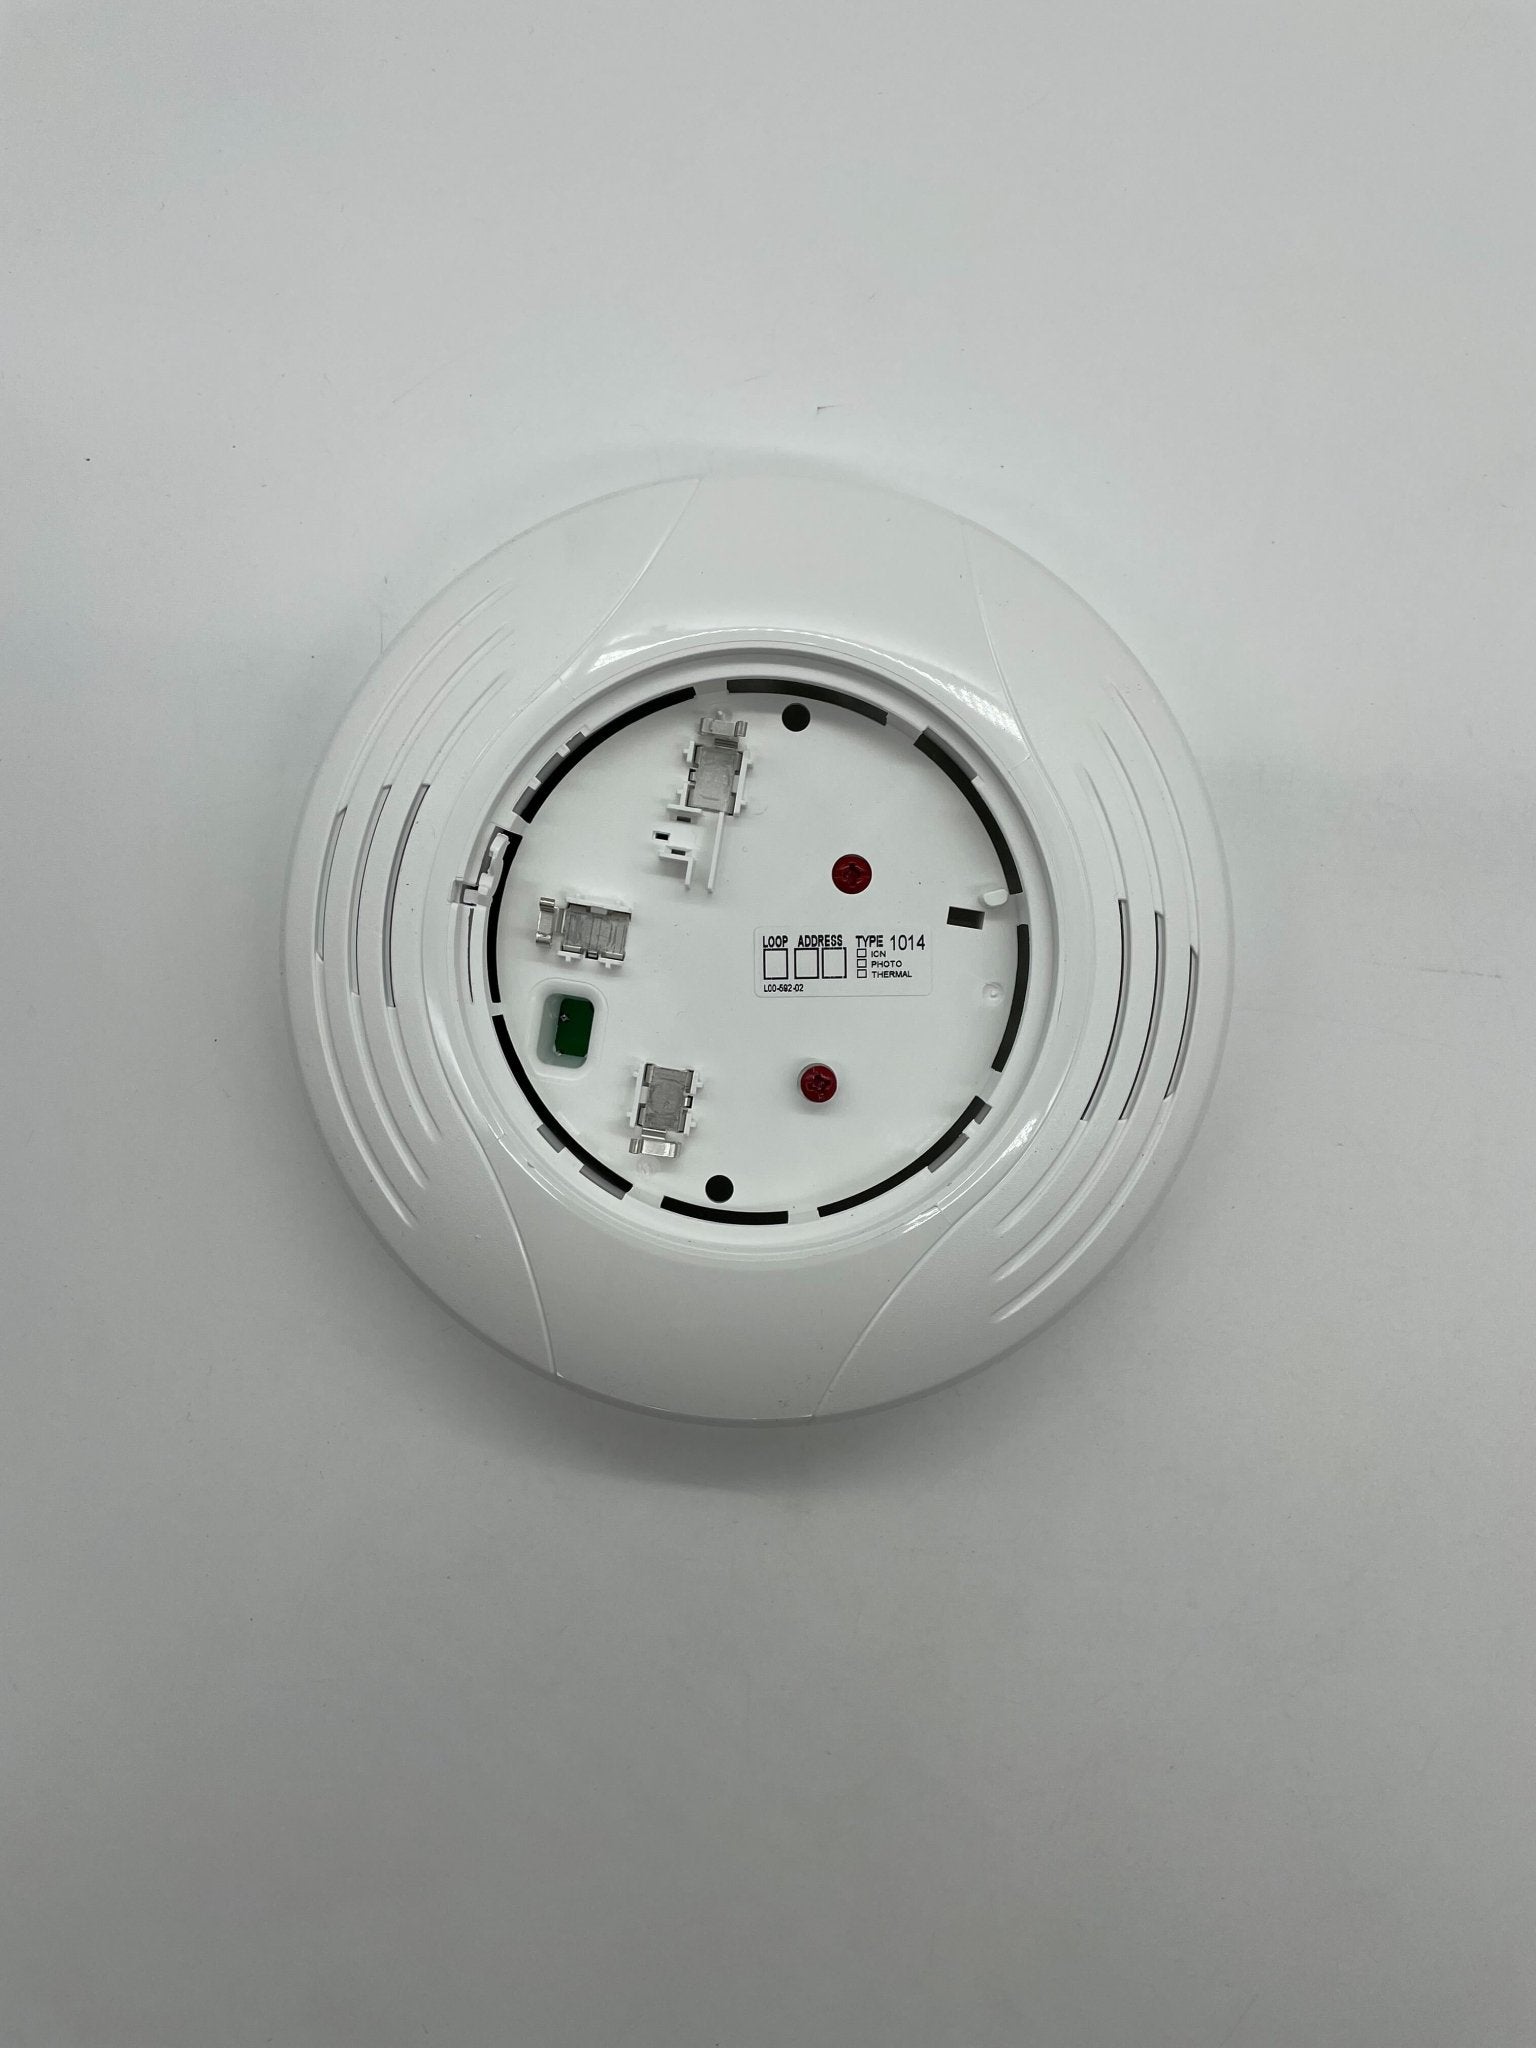 System Sensor B224BI-WH - The Fire Alarm Supplier